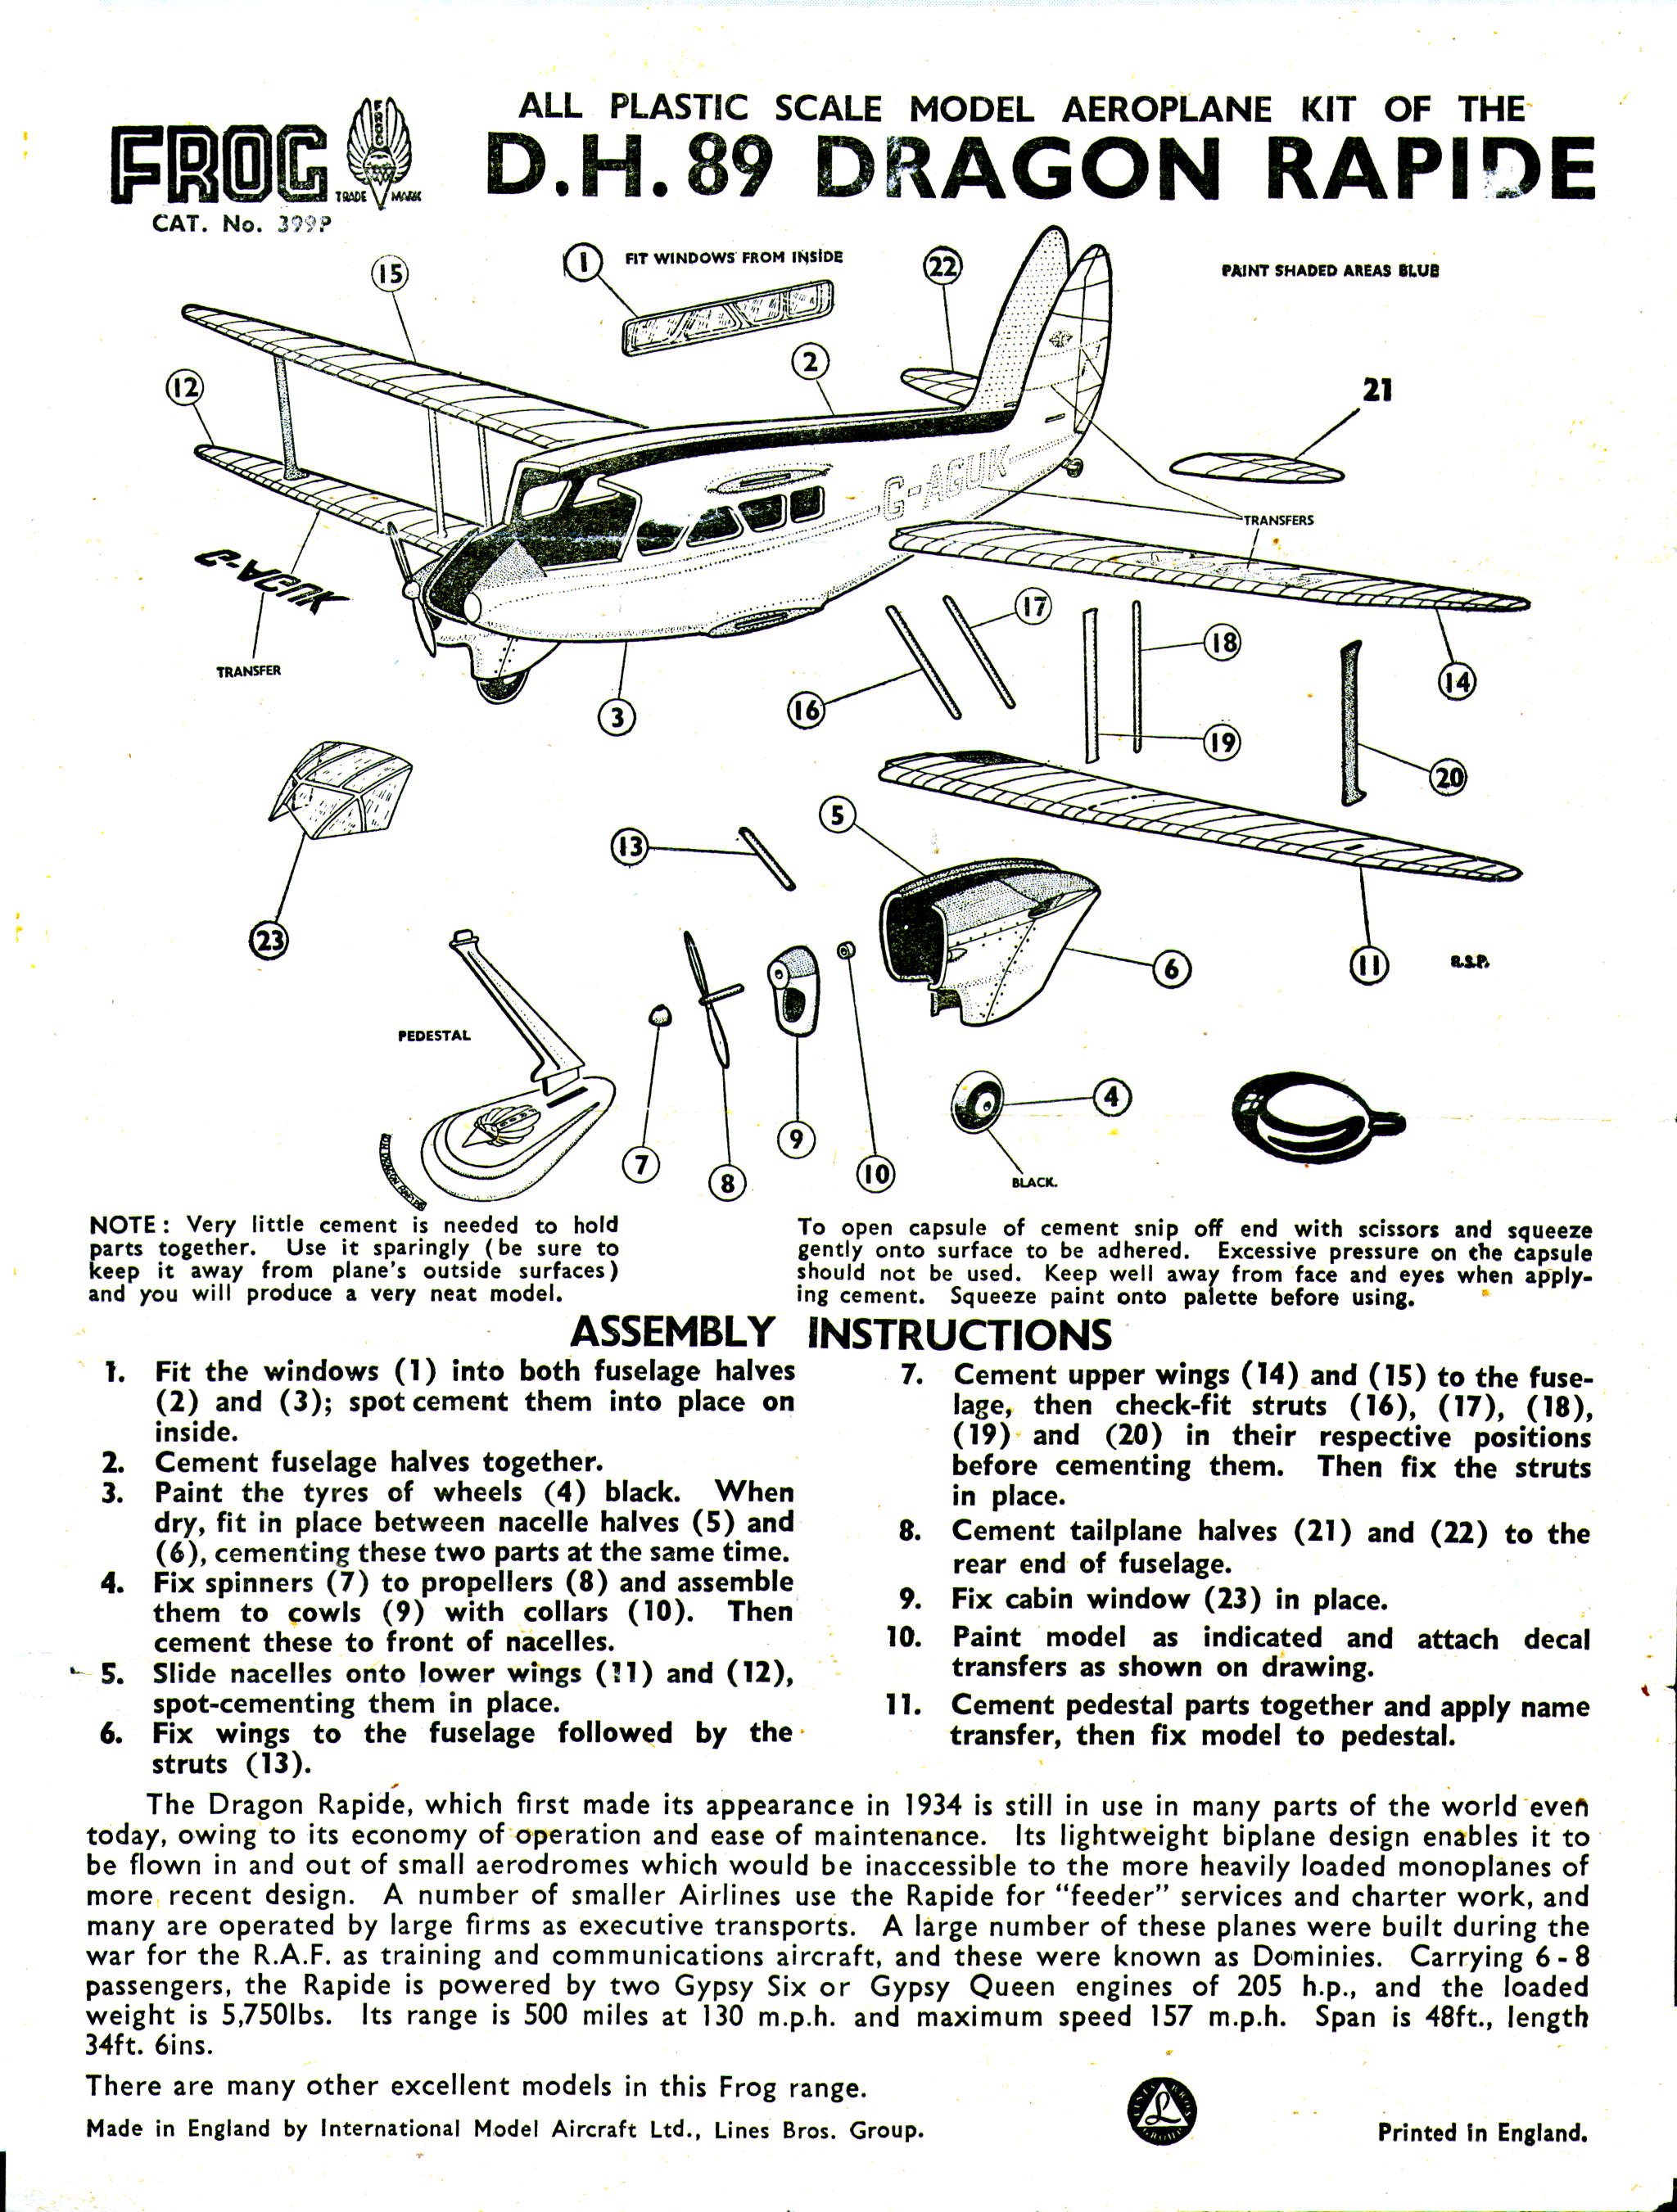 Assembly instructions FROG 399P de Havilland Dragon Rapide, IMA, 1959